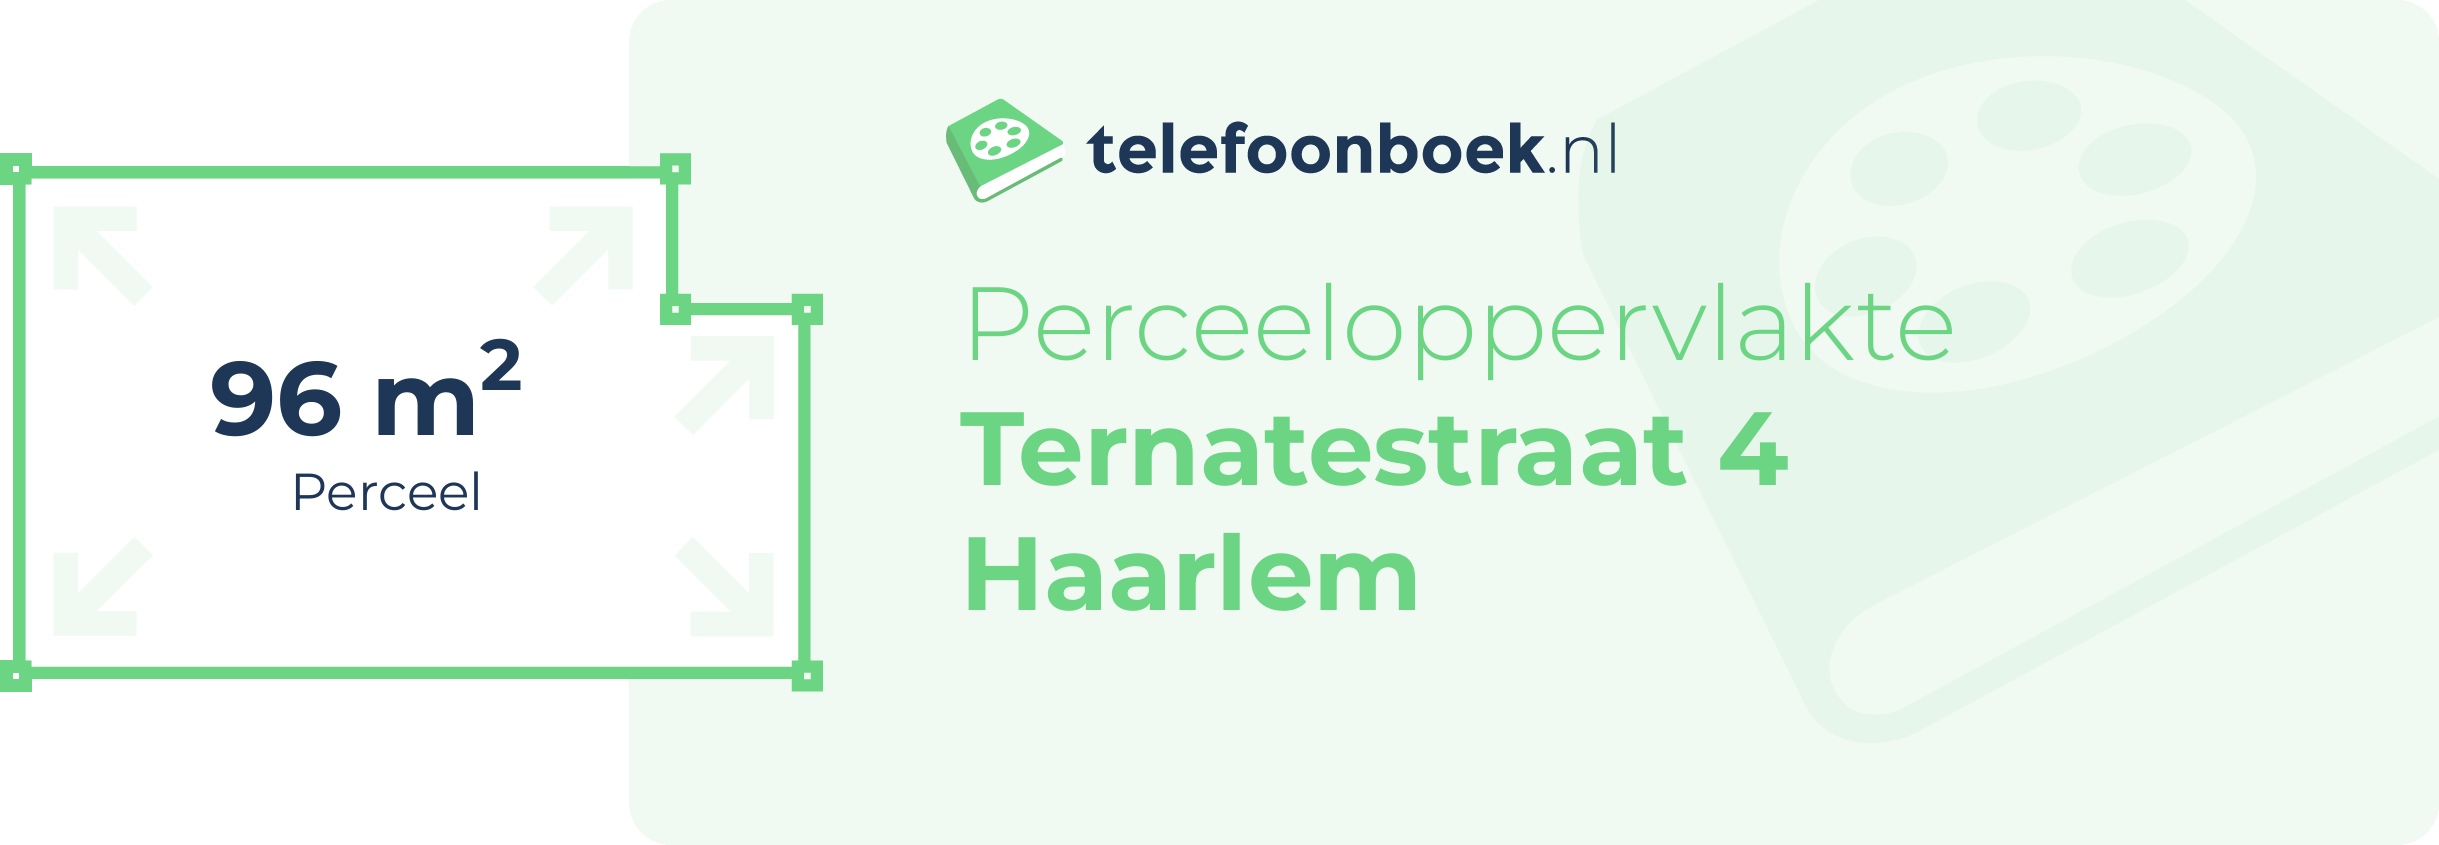 Perceeloppervlakte Ternatestraat 4 Haarlem